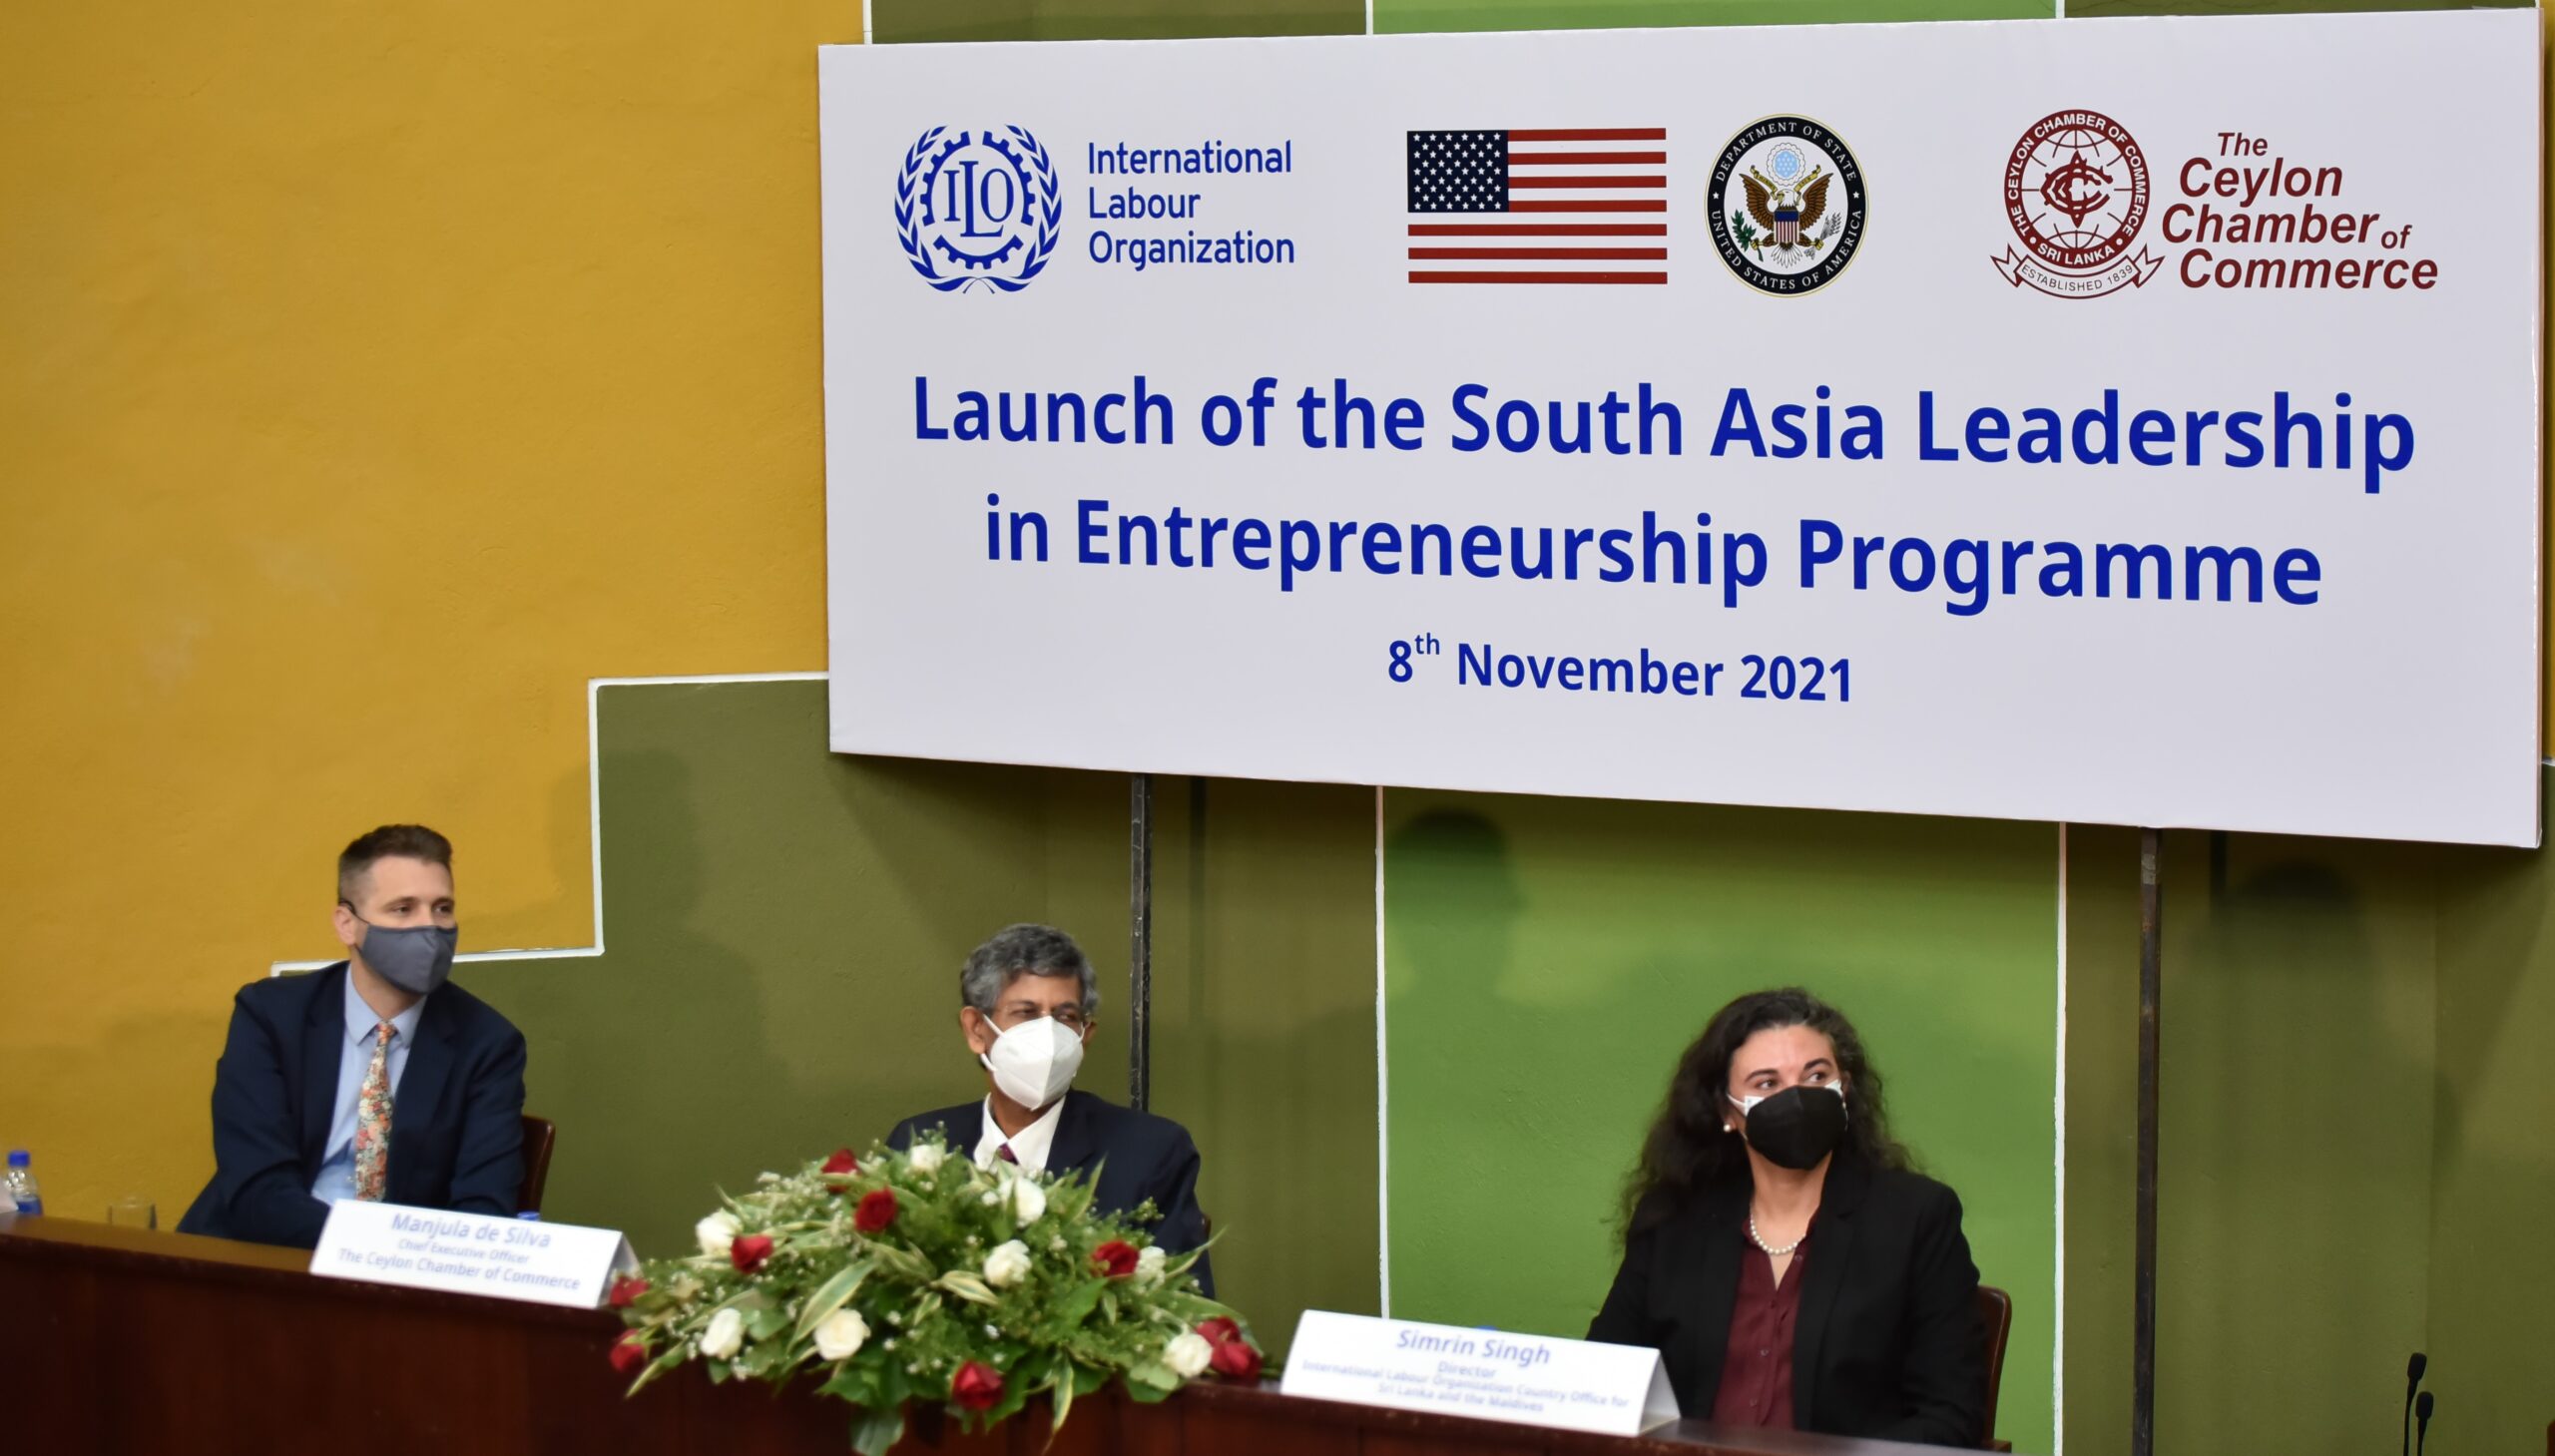 ILO Sri Lanka launched a new programme to promote youth entrepreneurship